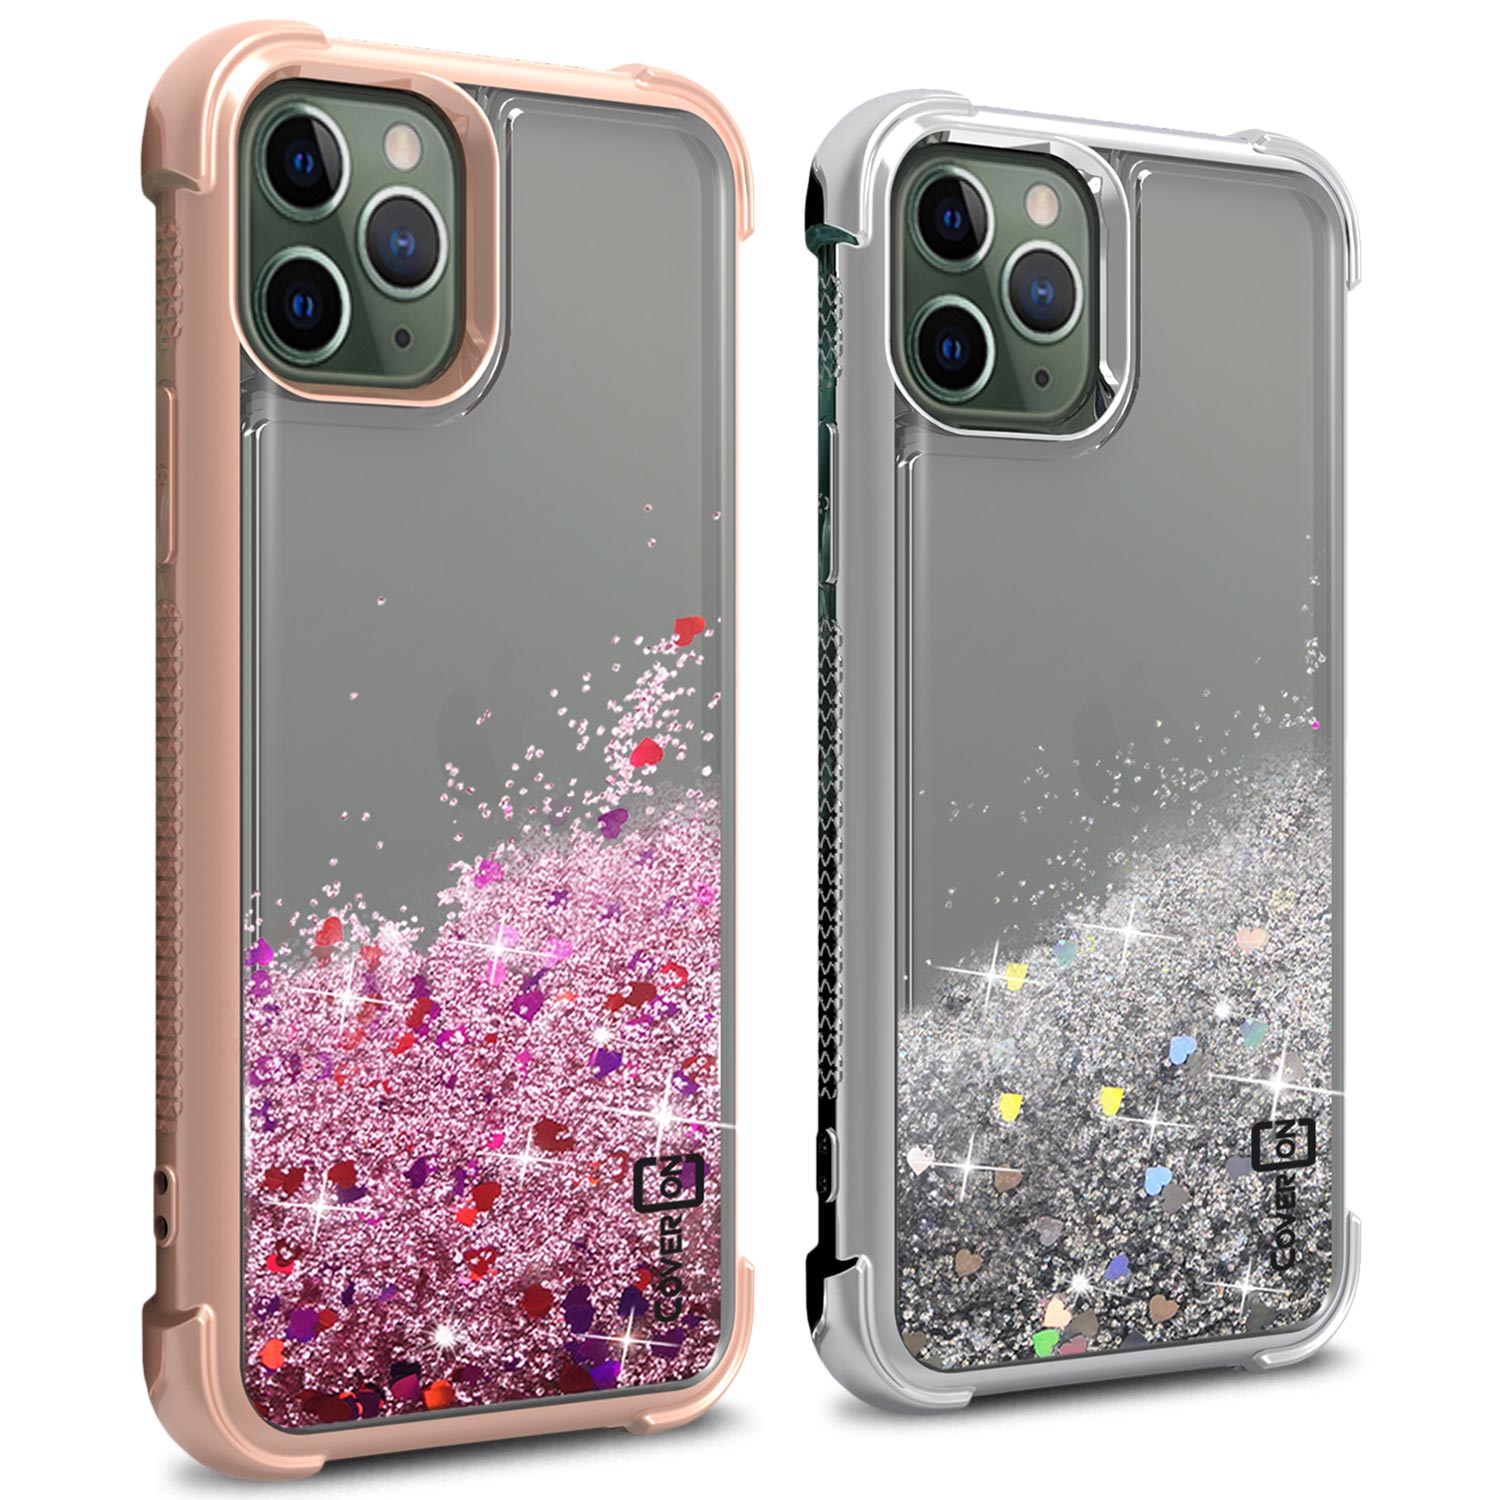 CoverON Apple iPhone 11 / Pro / Pro Max Liquid Glitter Case Phone Cover